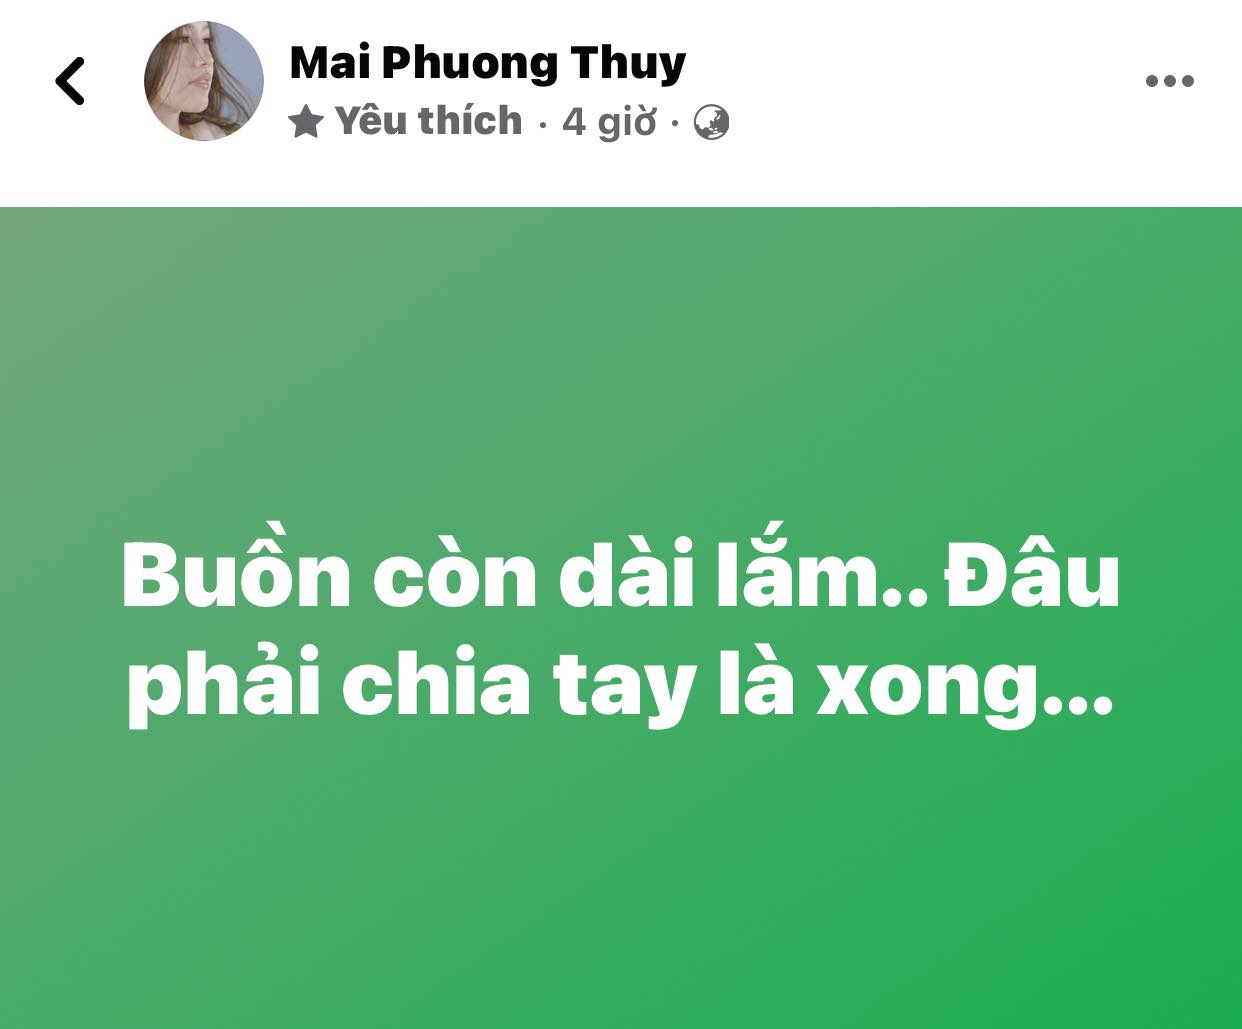 Vua-cong-khai-quay-lai-voi-noo-chua-lau-mai-phuong-thuy-da-de-cap-den-viec-chia-tay-gay-ngo-ngang